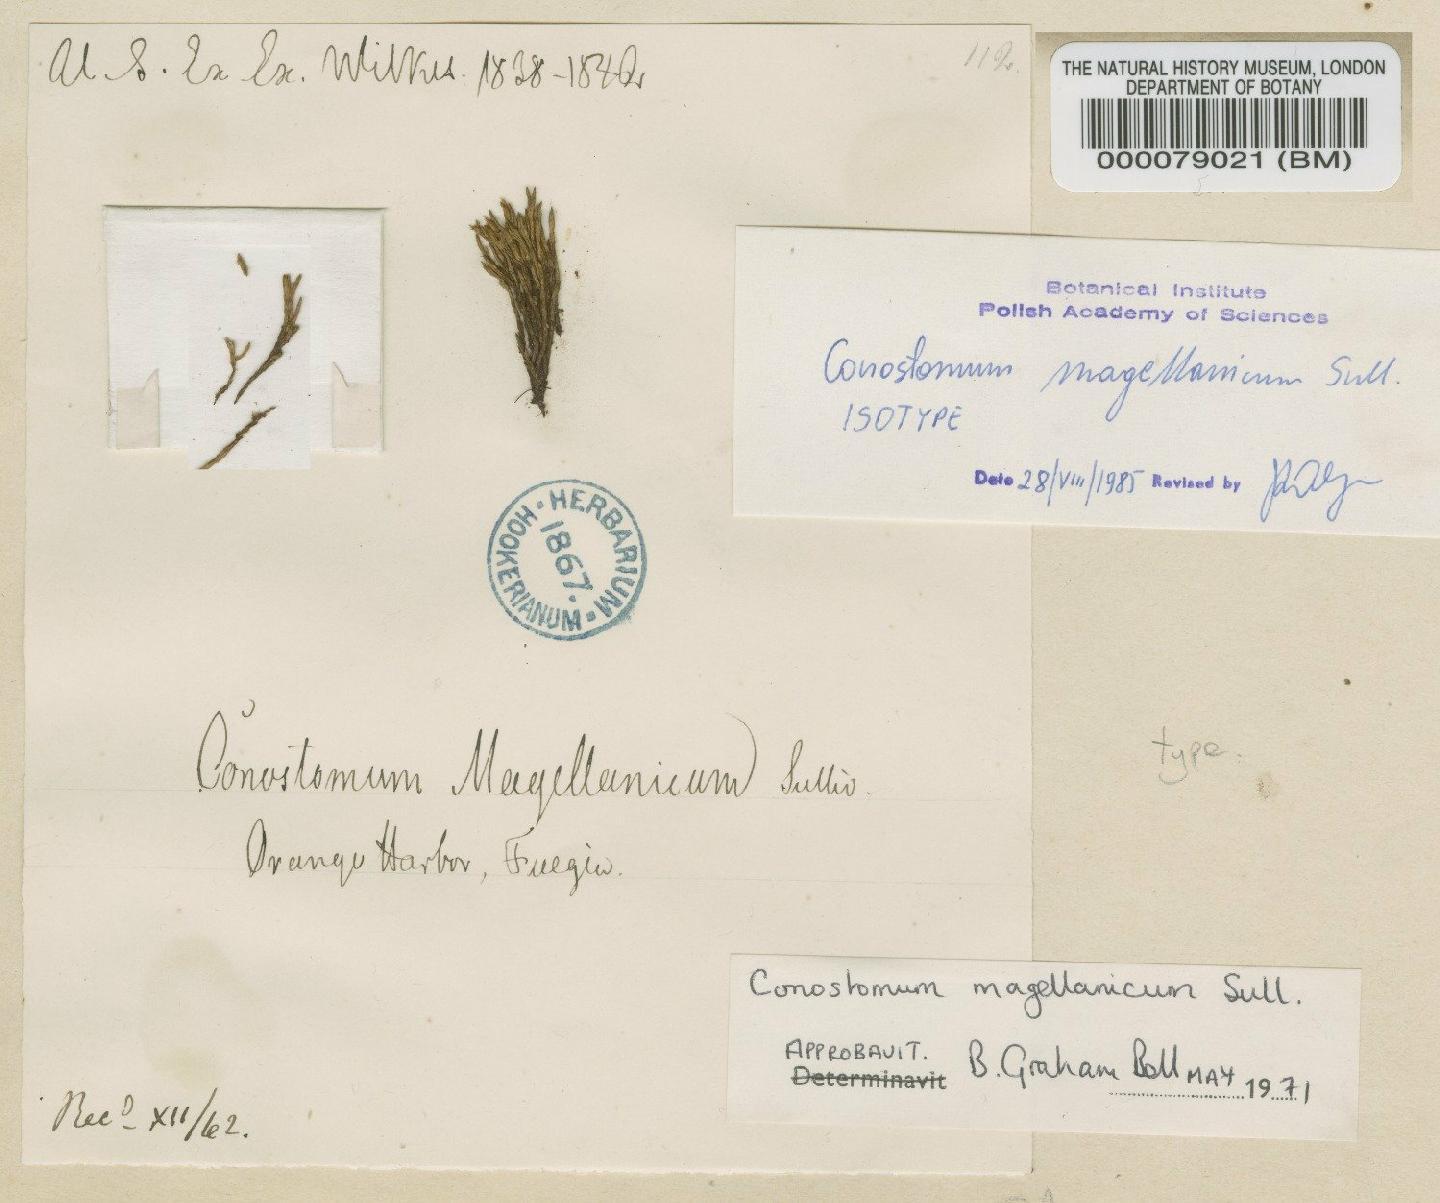 To NHMUK collection (Conostomum magellanicum Sull.; Isotype; NHMUK:ecatalogue:602493)